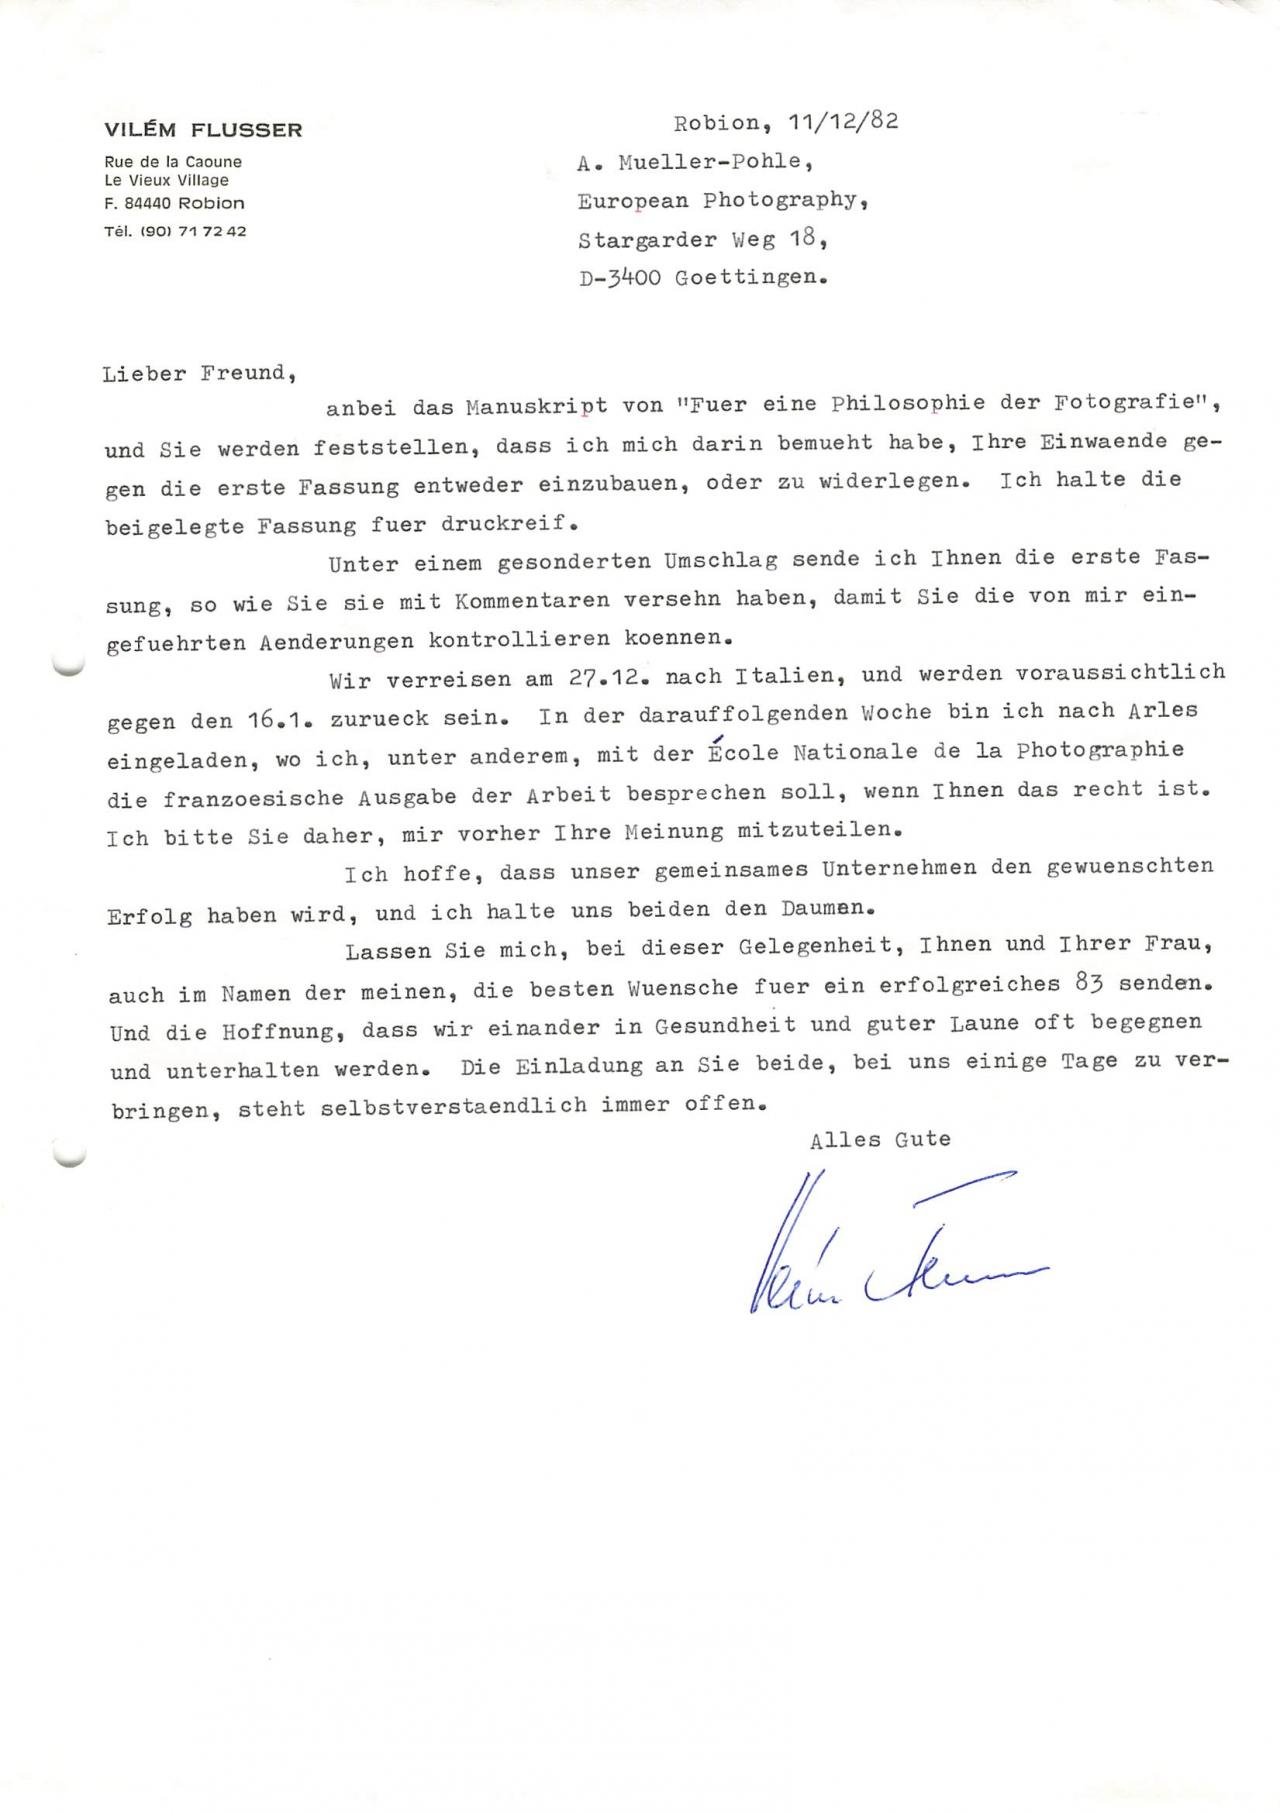 Letter from Vilém Flusser to Andreas Müller-Pohle, 11.12.1982